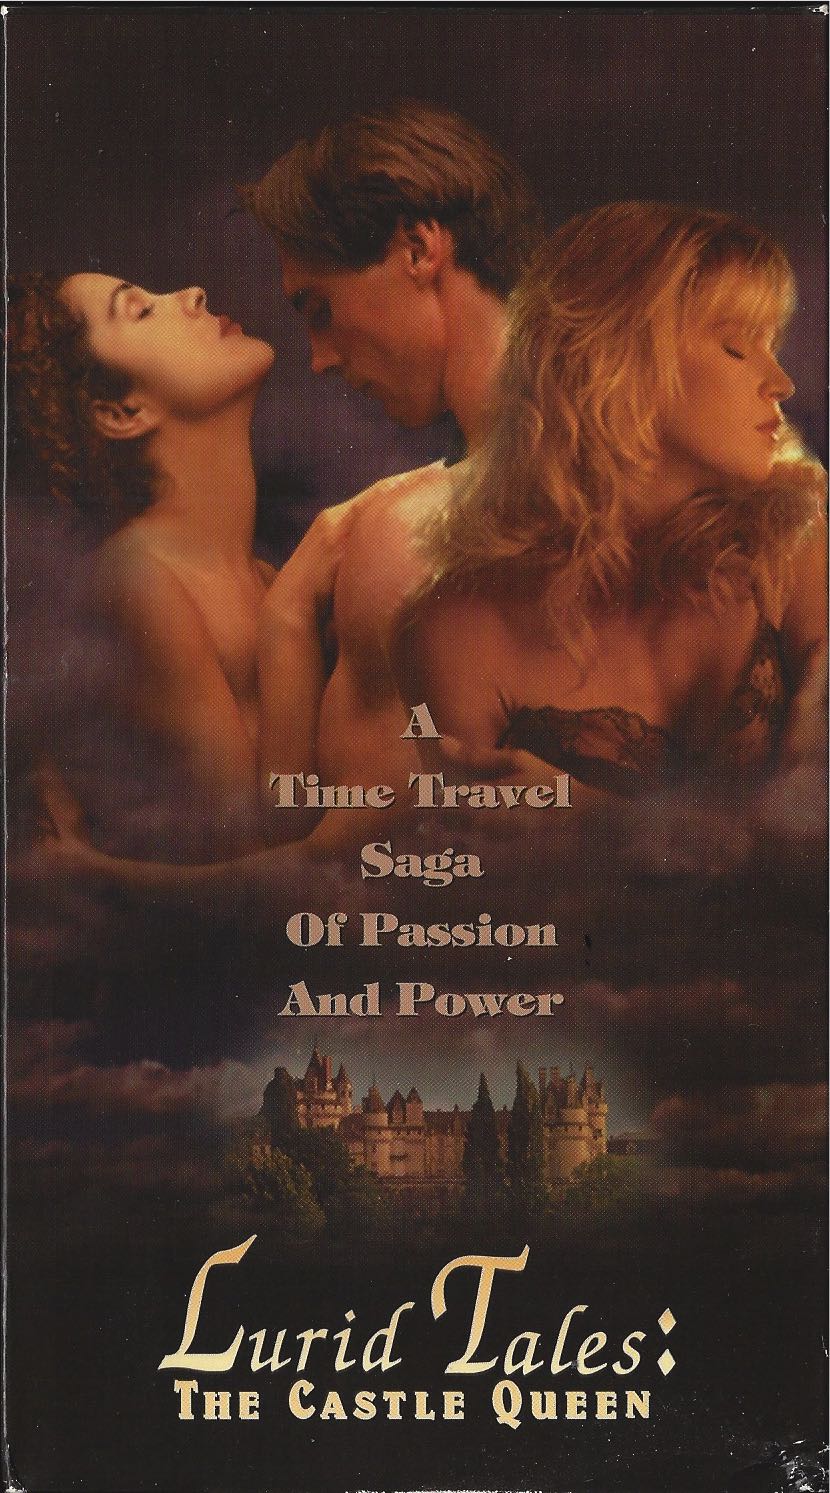 Lurid Tales: The Castle Queen (1998) Screenshot 5 